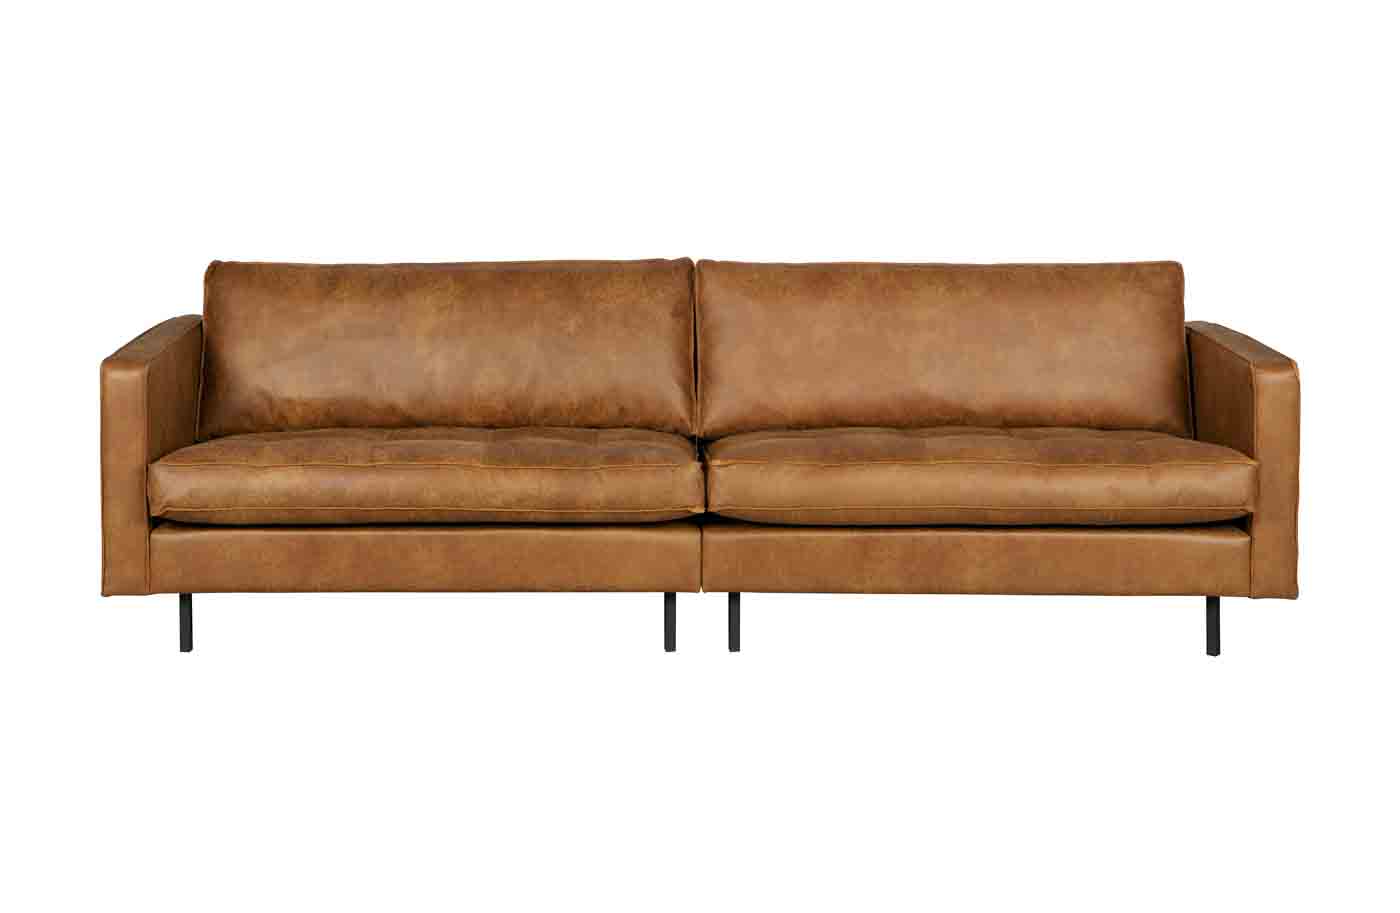 Classic Sofa Rodeo aus recyceltem Leder. Hochwertiges Design Sofa mit hohen Sitzkomfort